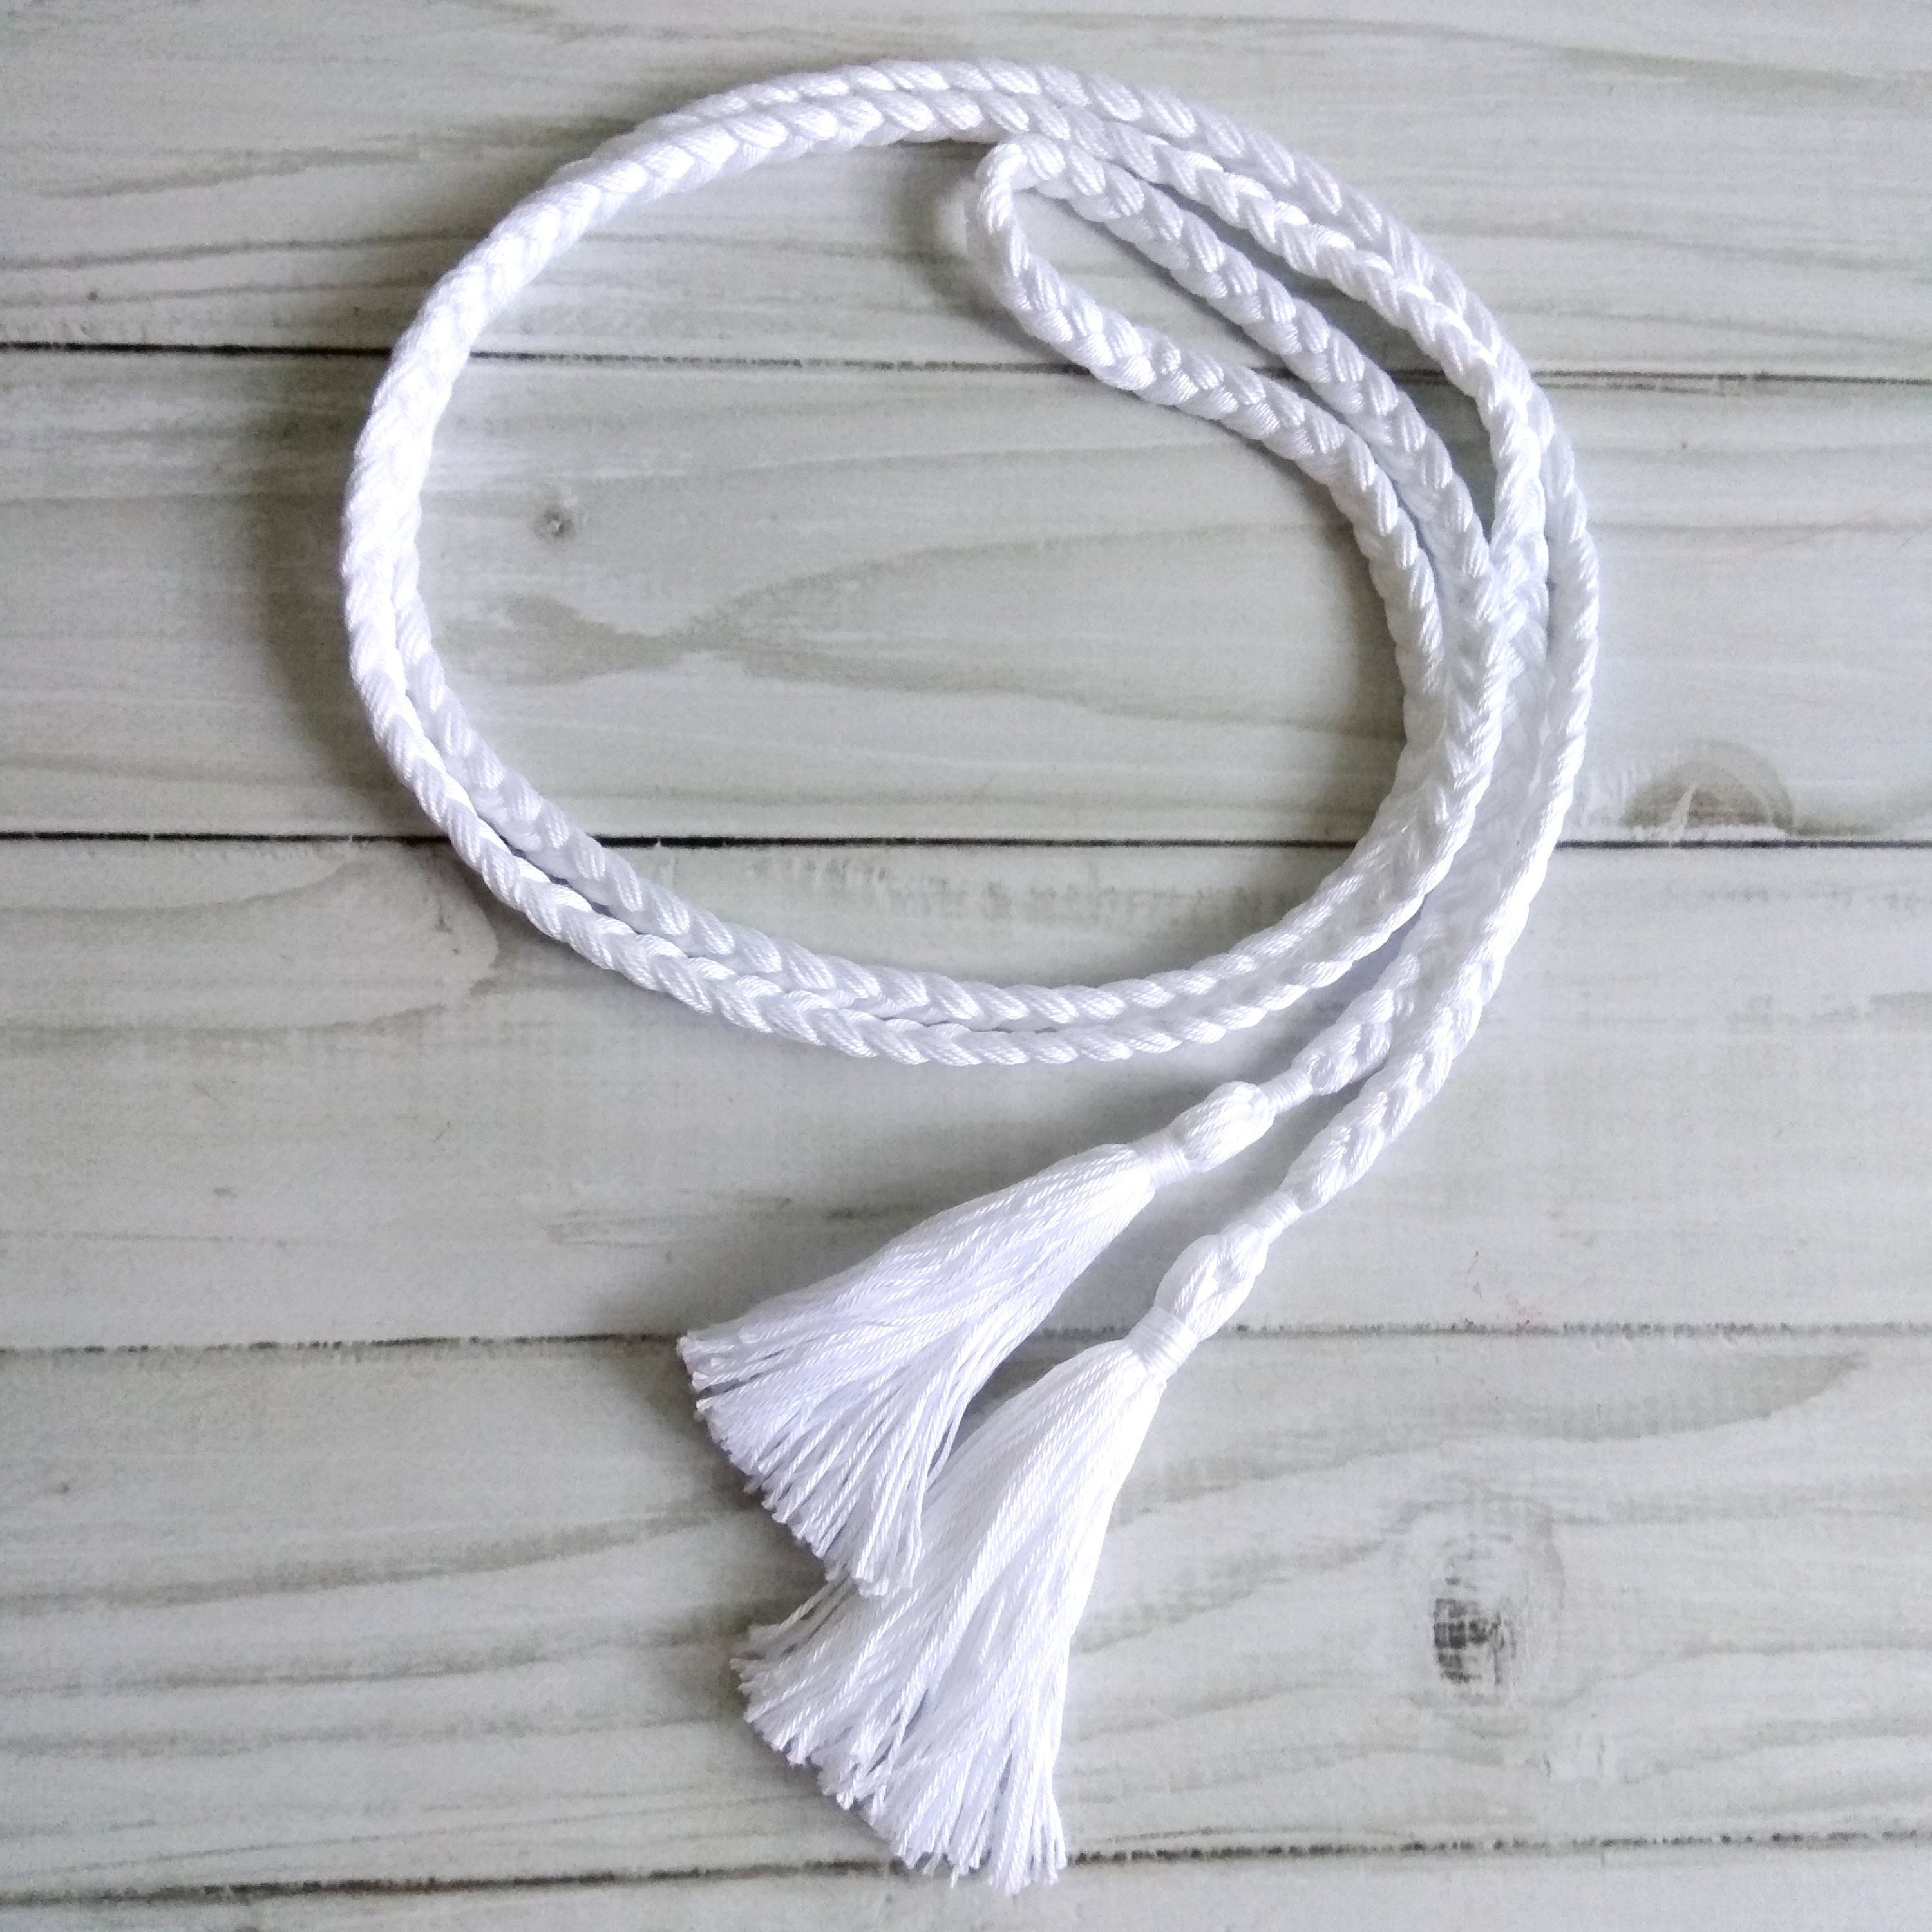 White Braided Rope Belt With Tassels, Handmade Cotton Boho Dress Belt 